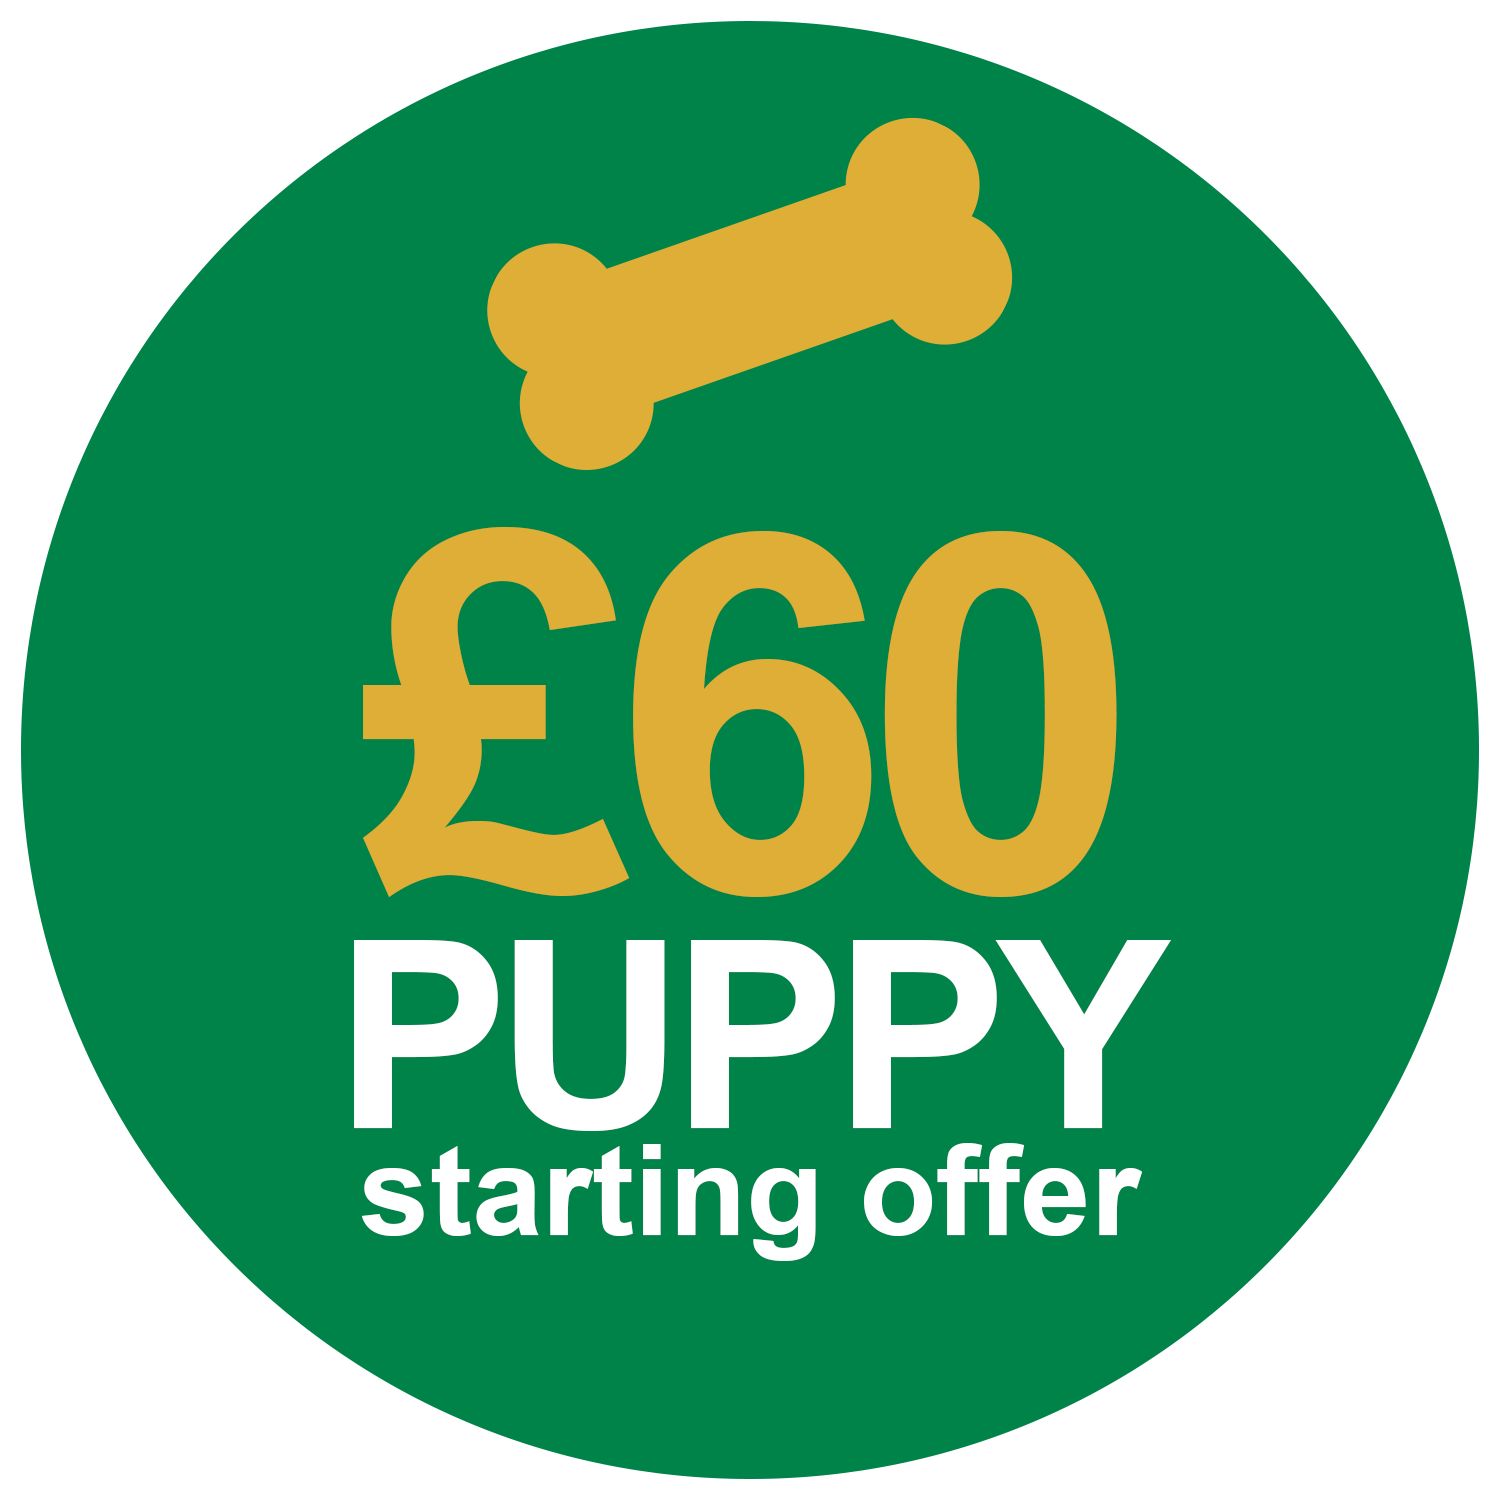 Parkside Vets - Puppy Plan offer - £60